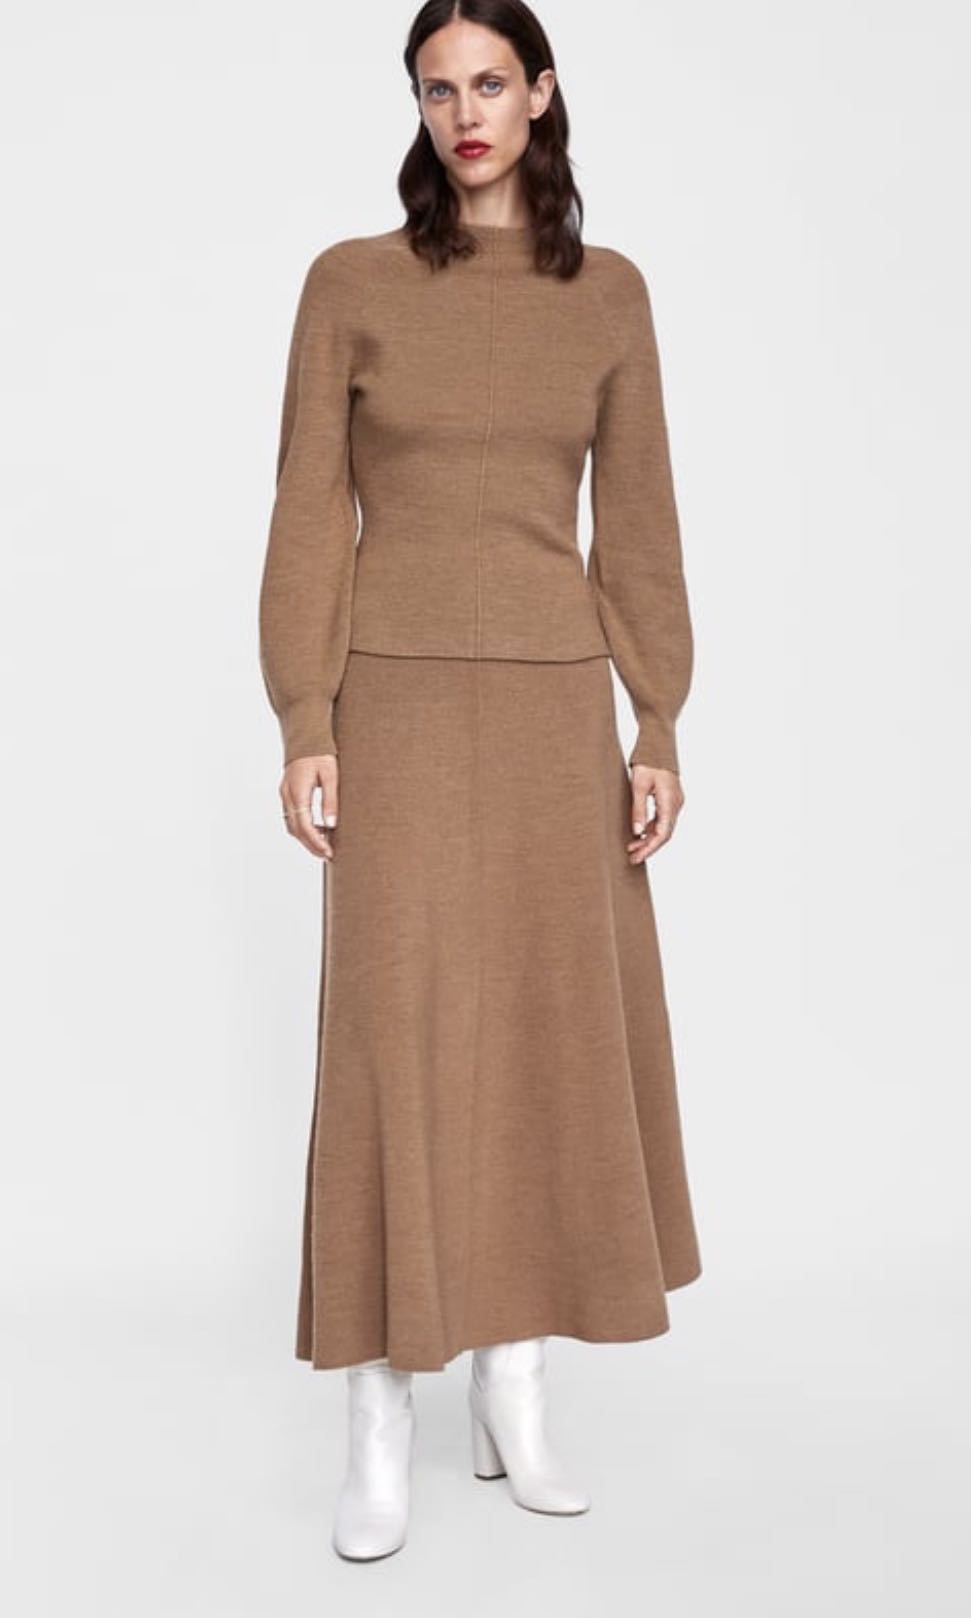 Zara minimal collection skirt, Women's 